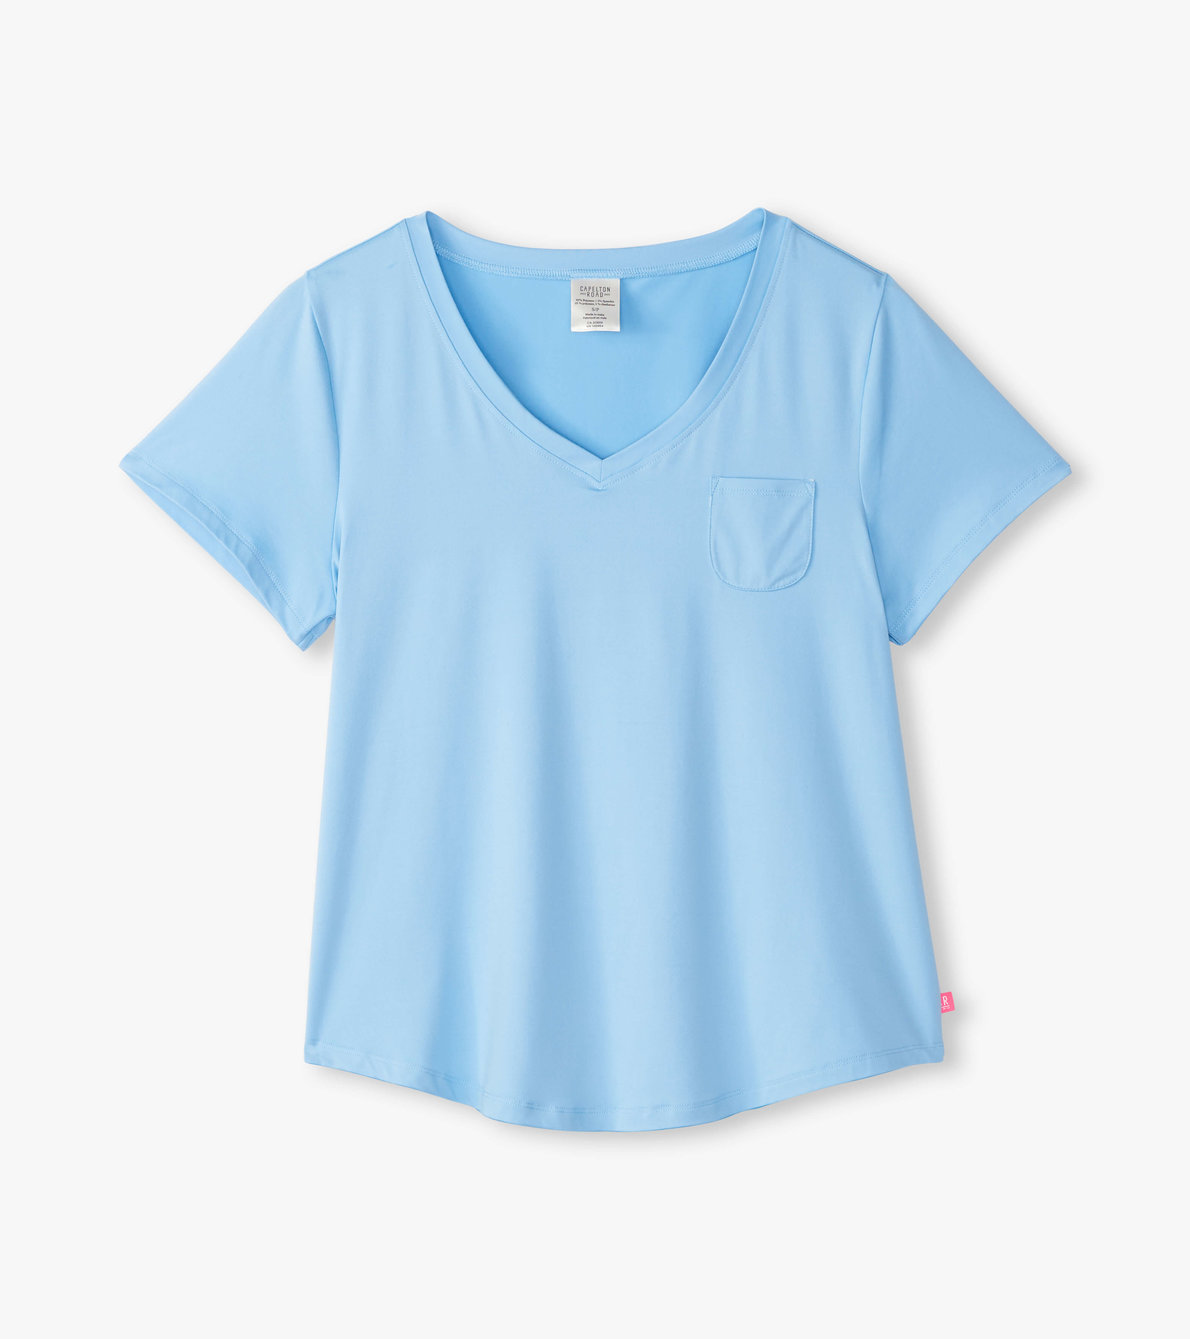 View larger image of Capelton Road Women's Placid Blue V-Neck T-Shirt